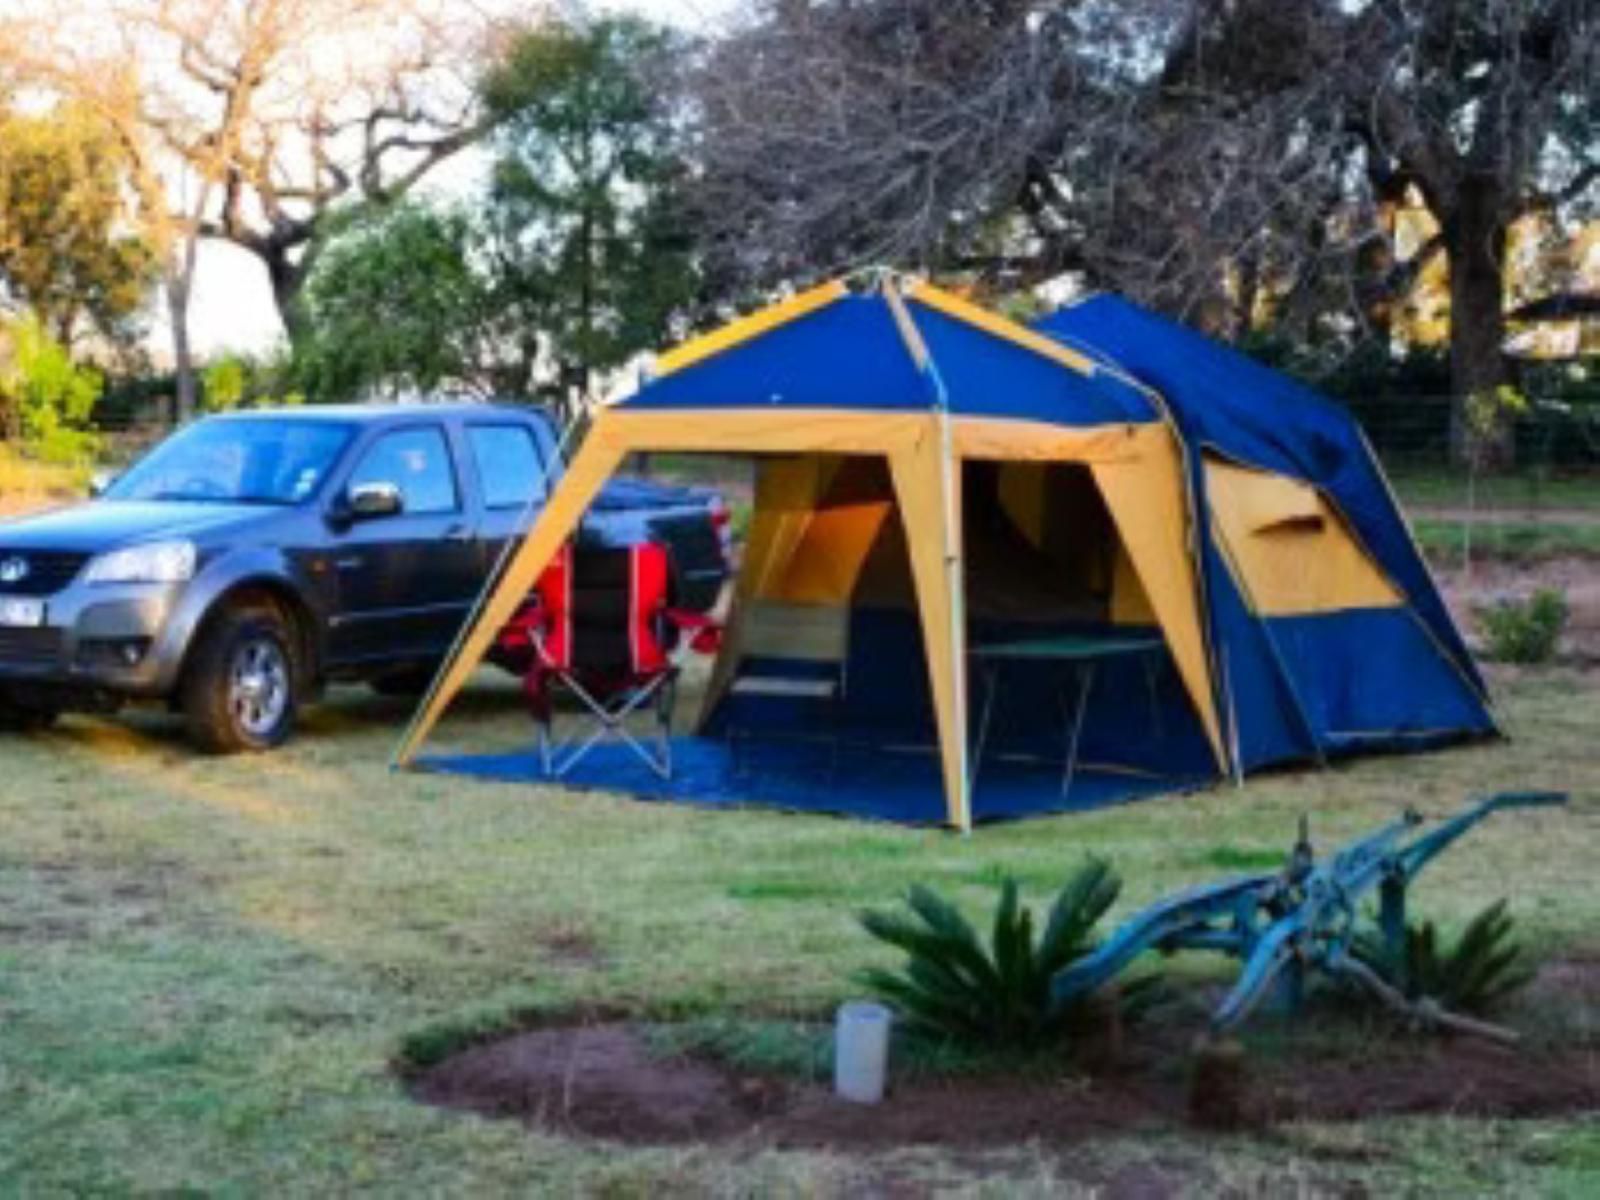 Kiaat Caravan Park Hazyview Mpumalanga South Africa Tent, Architecture